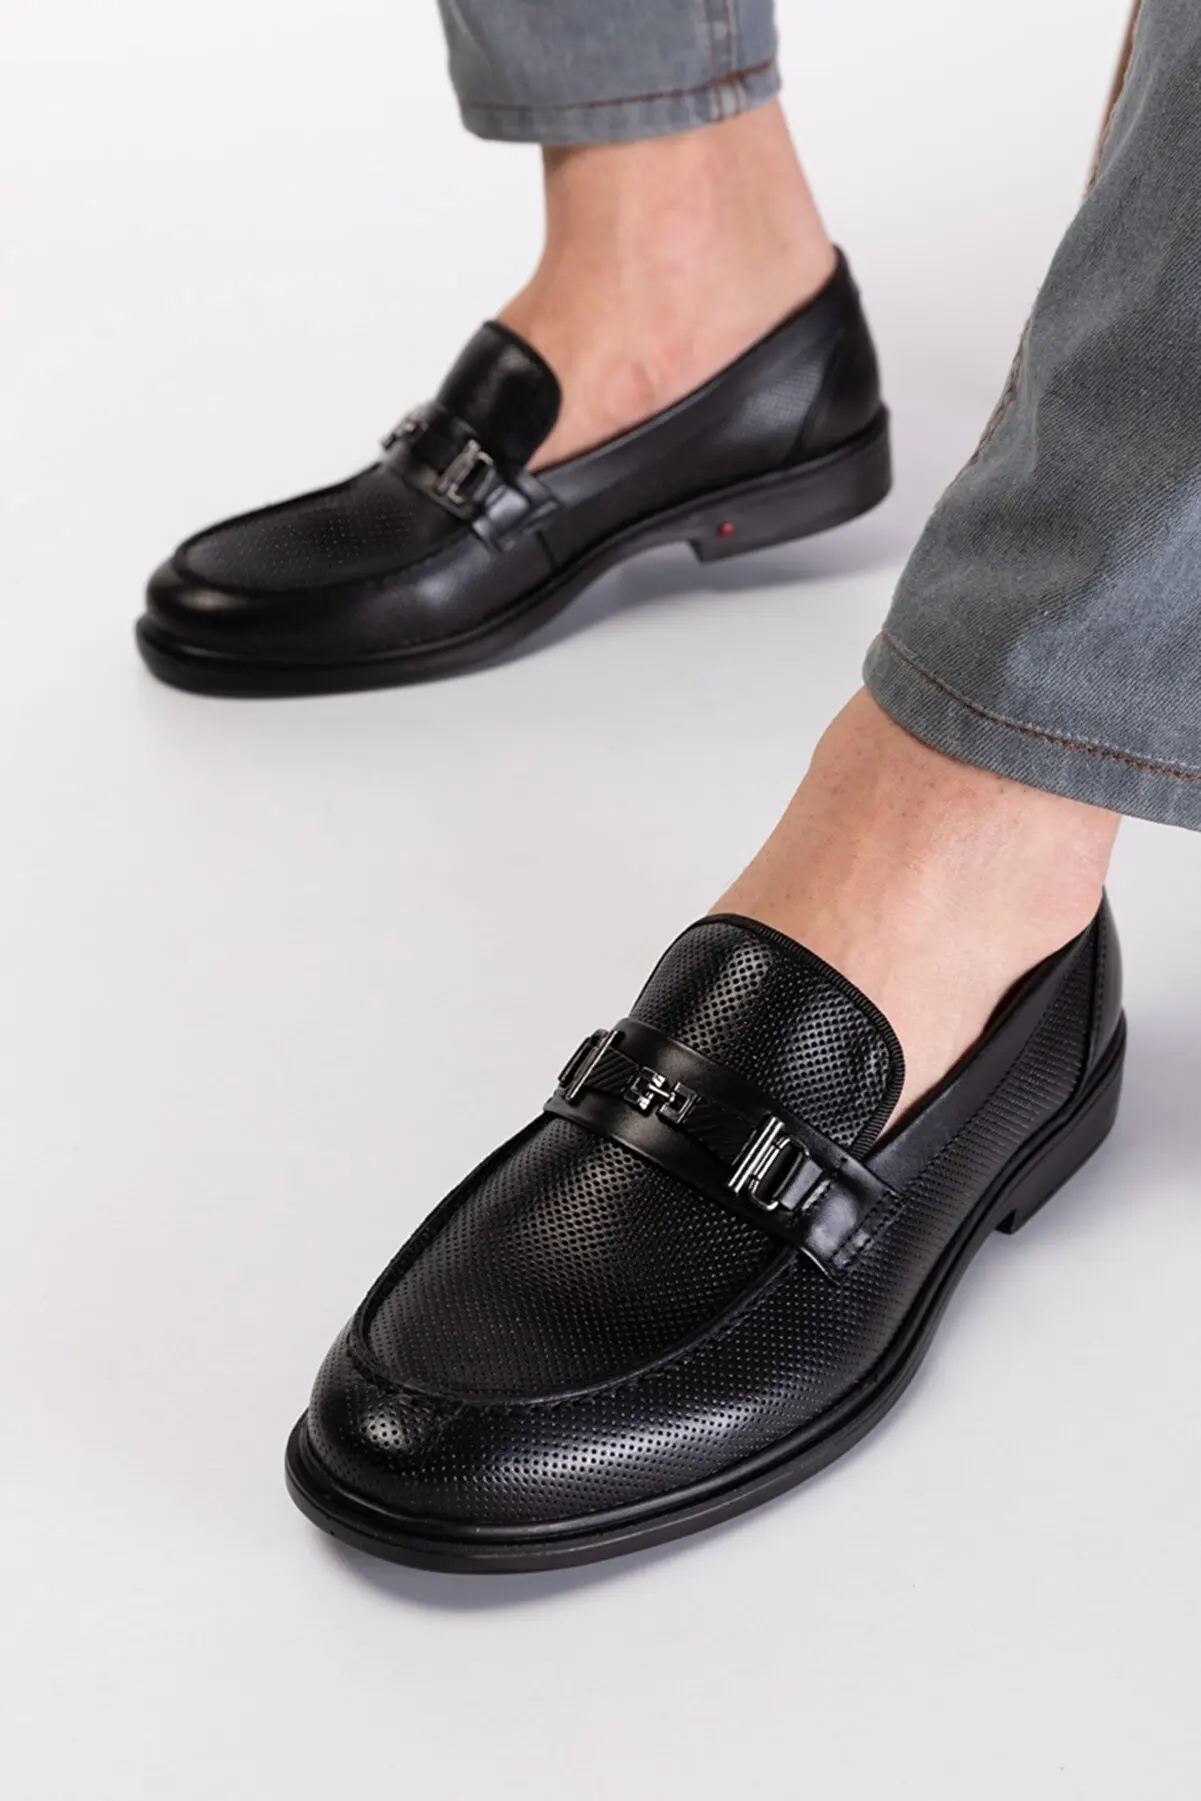 Men Navy Blue Loafers Slip on Moccasins,Men Summer Shoes, 4 Colors Men Classic Genuine Leather Shoe,2022 Men Black Leather Shoes